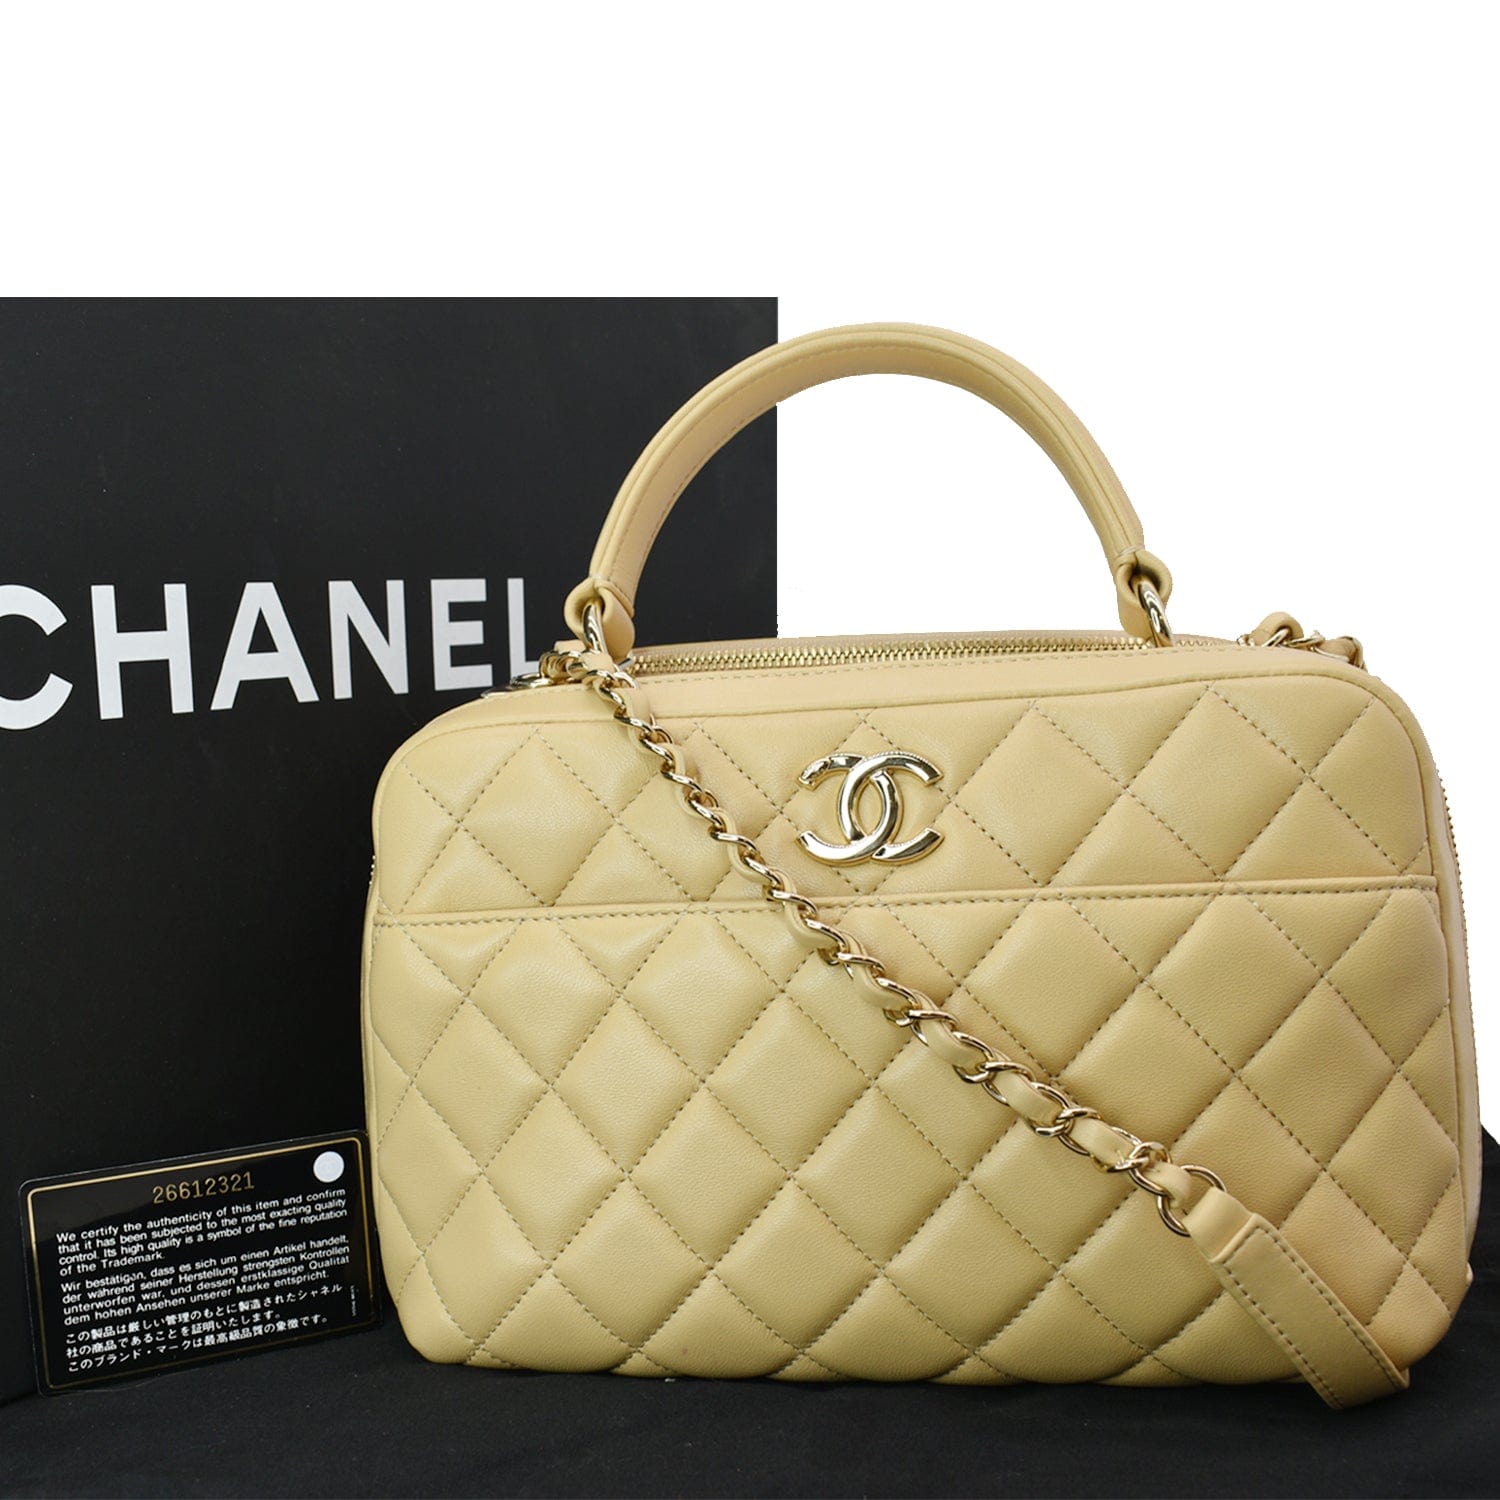 Chanel CC Trendy Bowling Bag